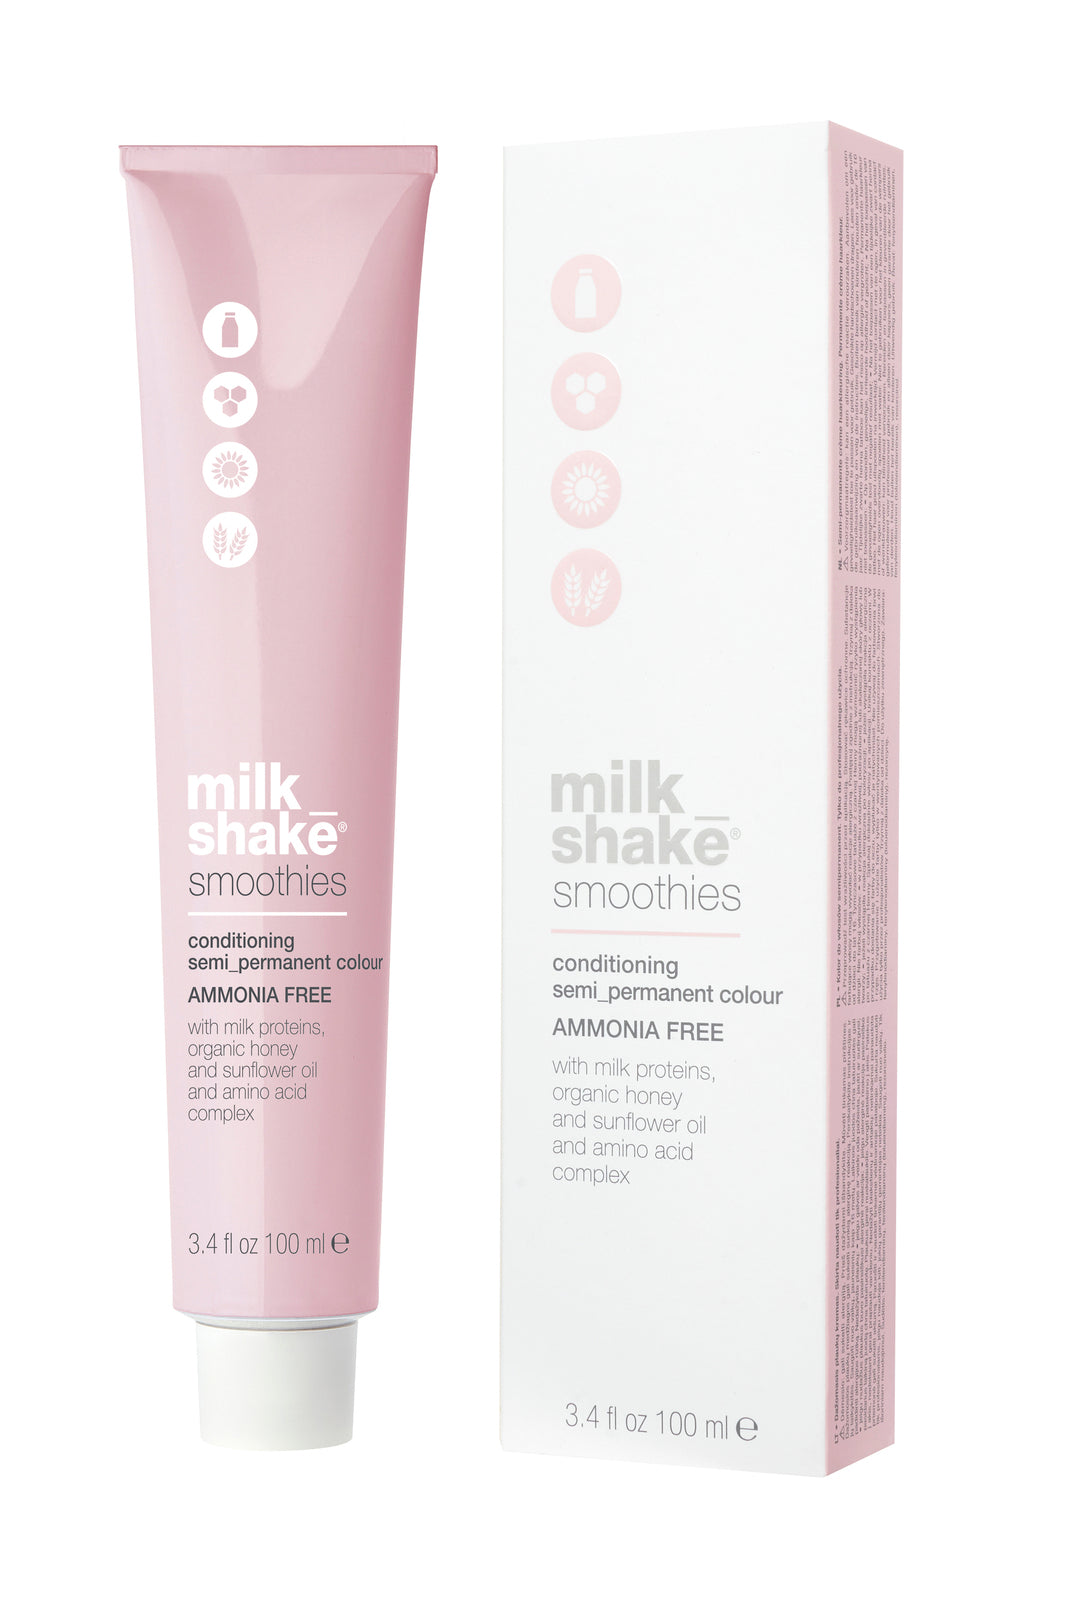 Milkshake smoothies semi-permanent color 1